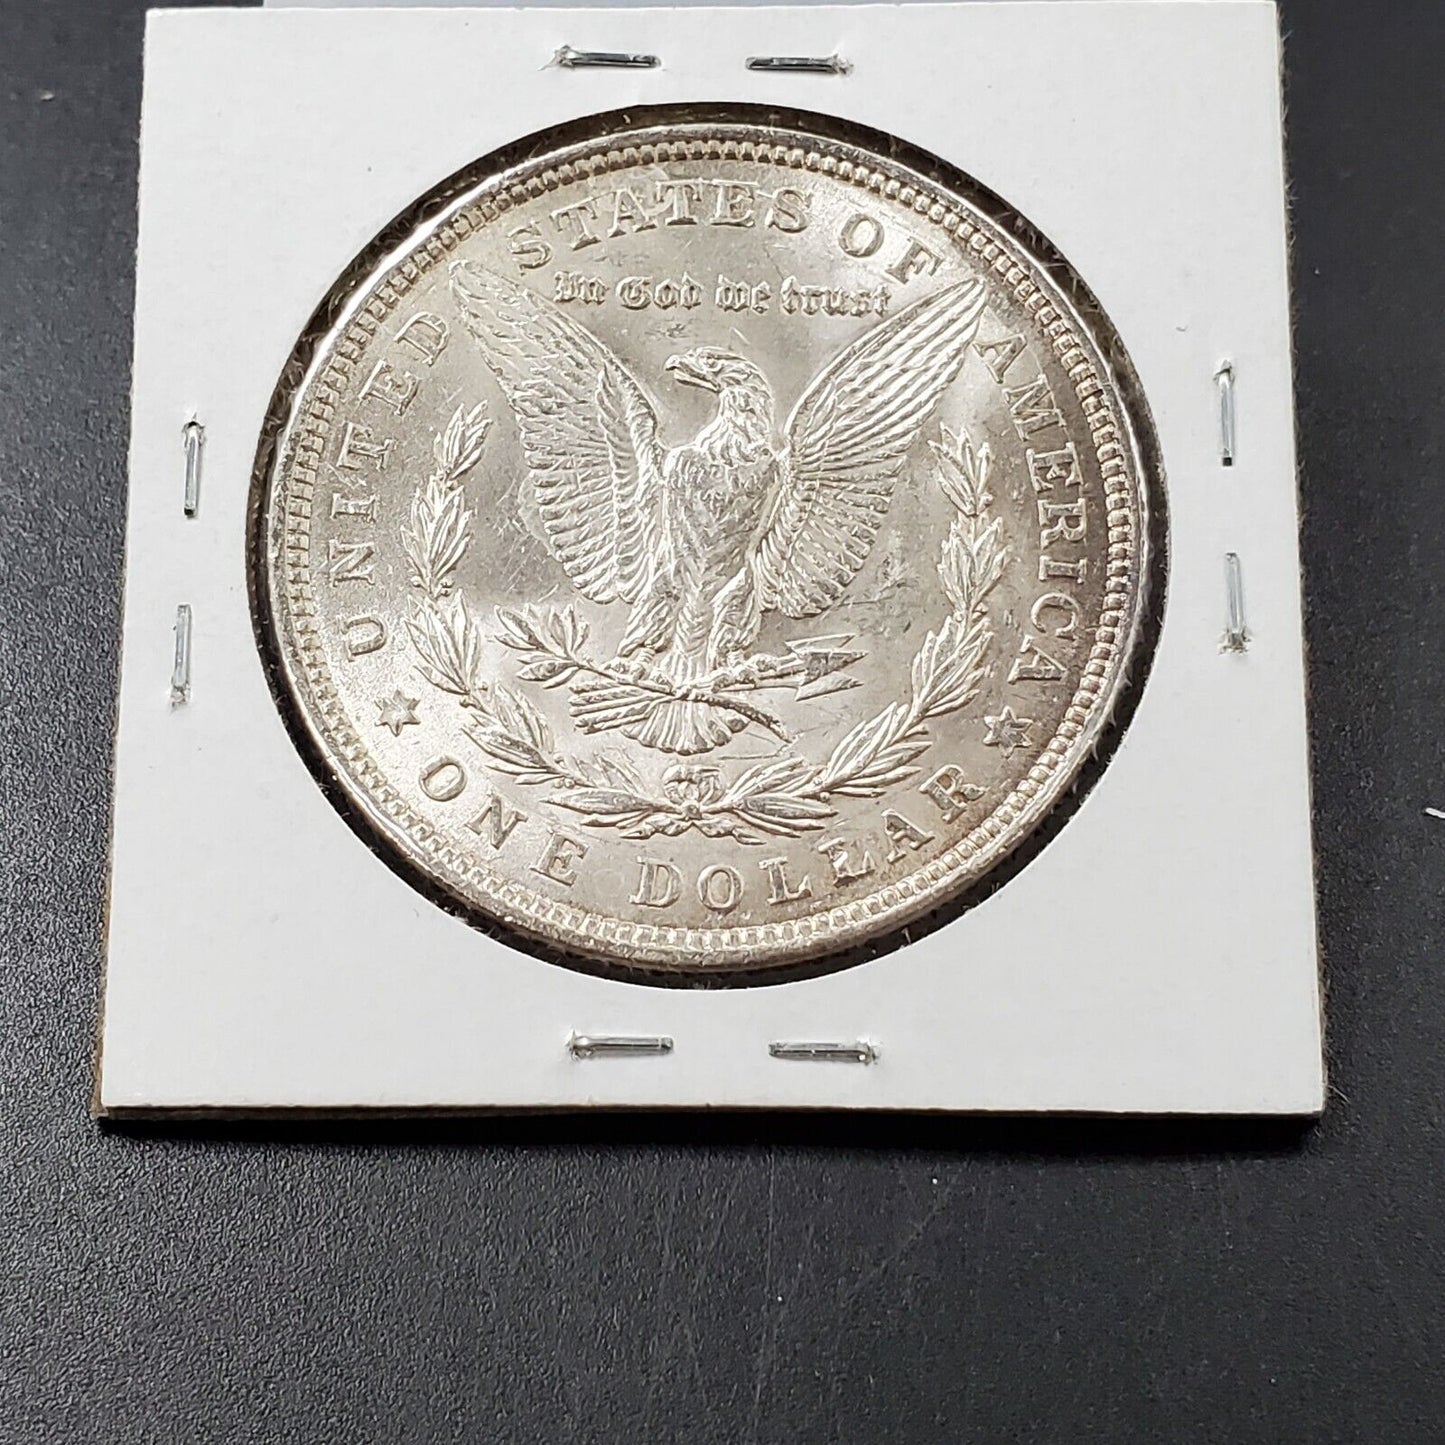 1921 P $1 Morgan Eagle Silver Dollar Coin UNC Planchet Flaw + Die Cracks Variety